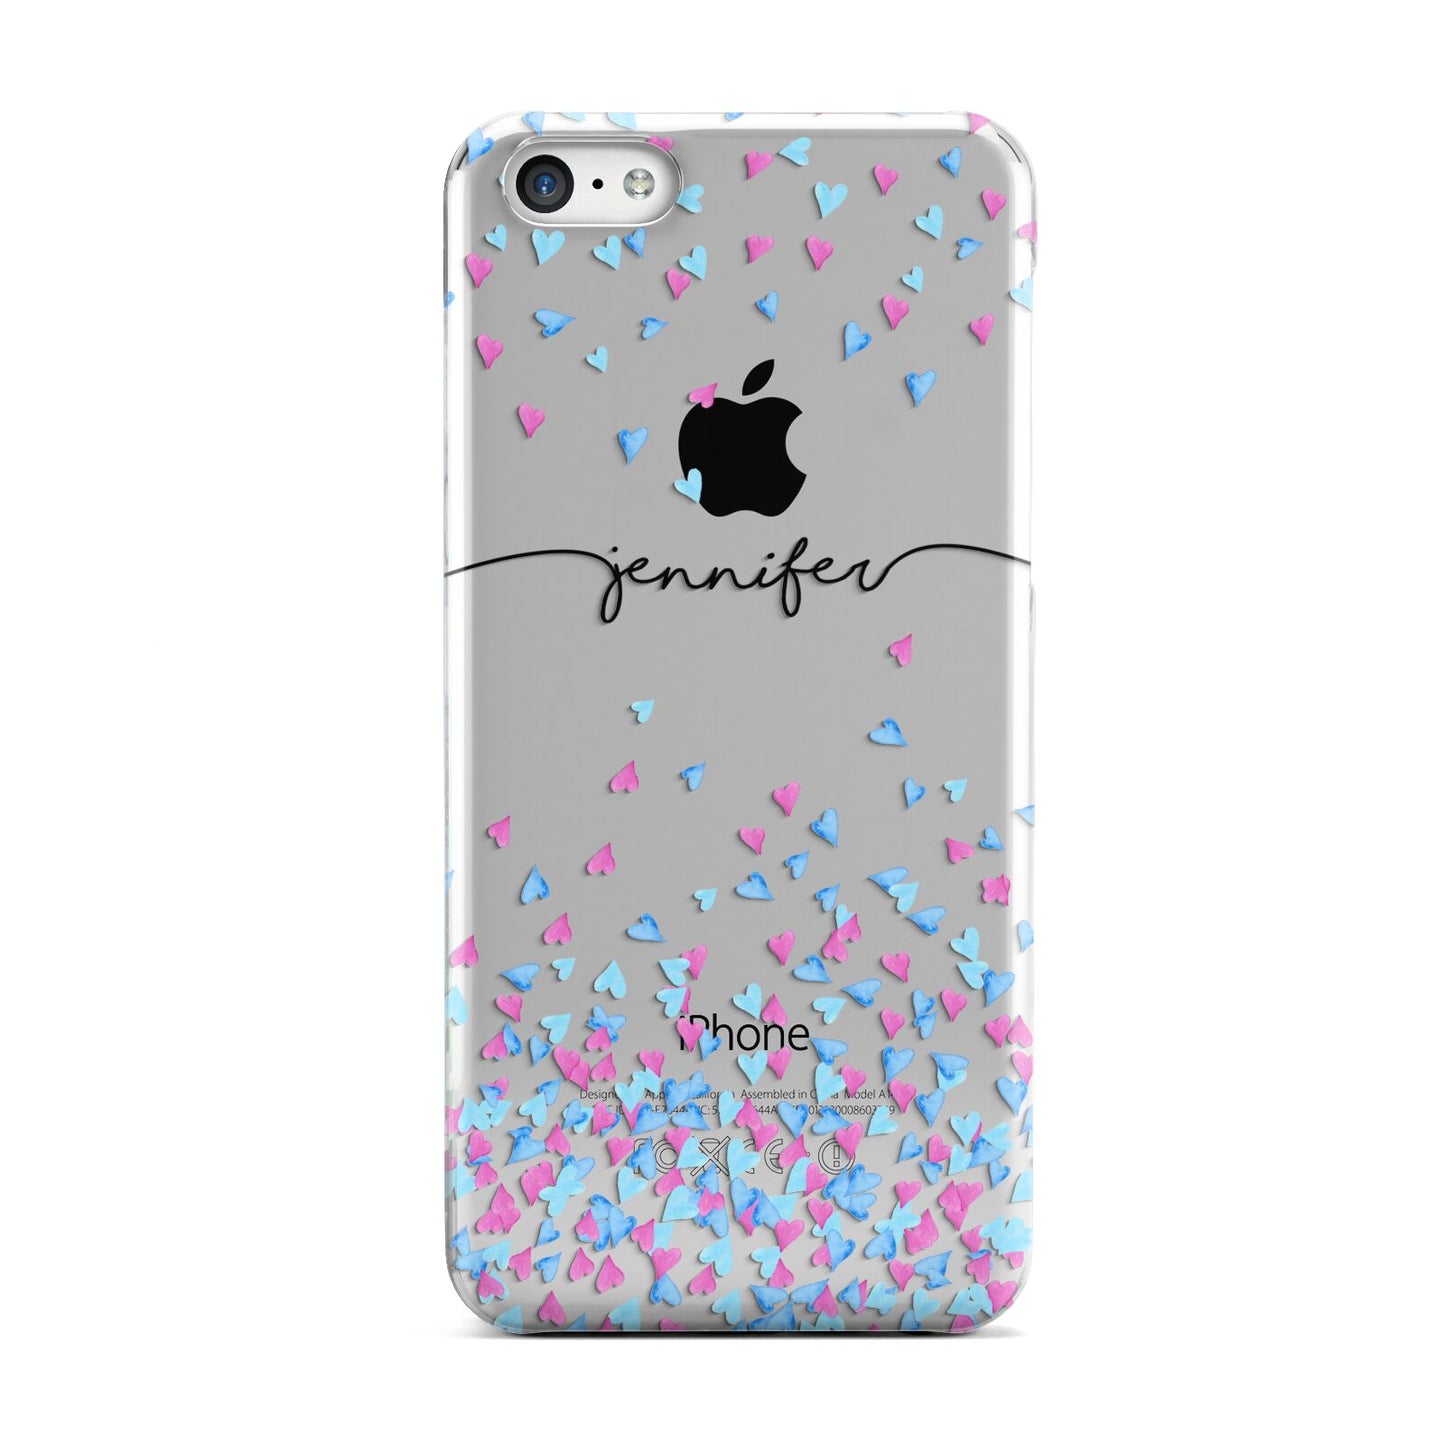 Personalised Confetti Hearts Apple iPhone 5c Case